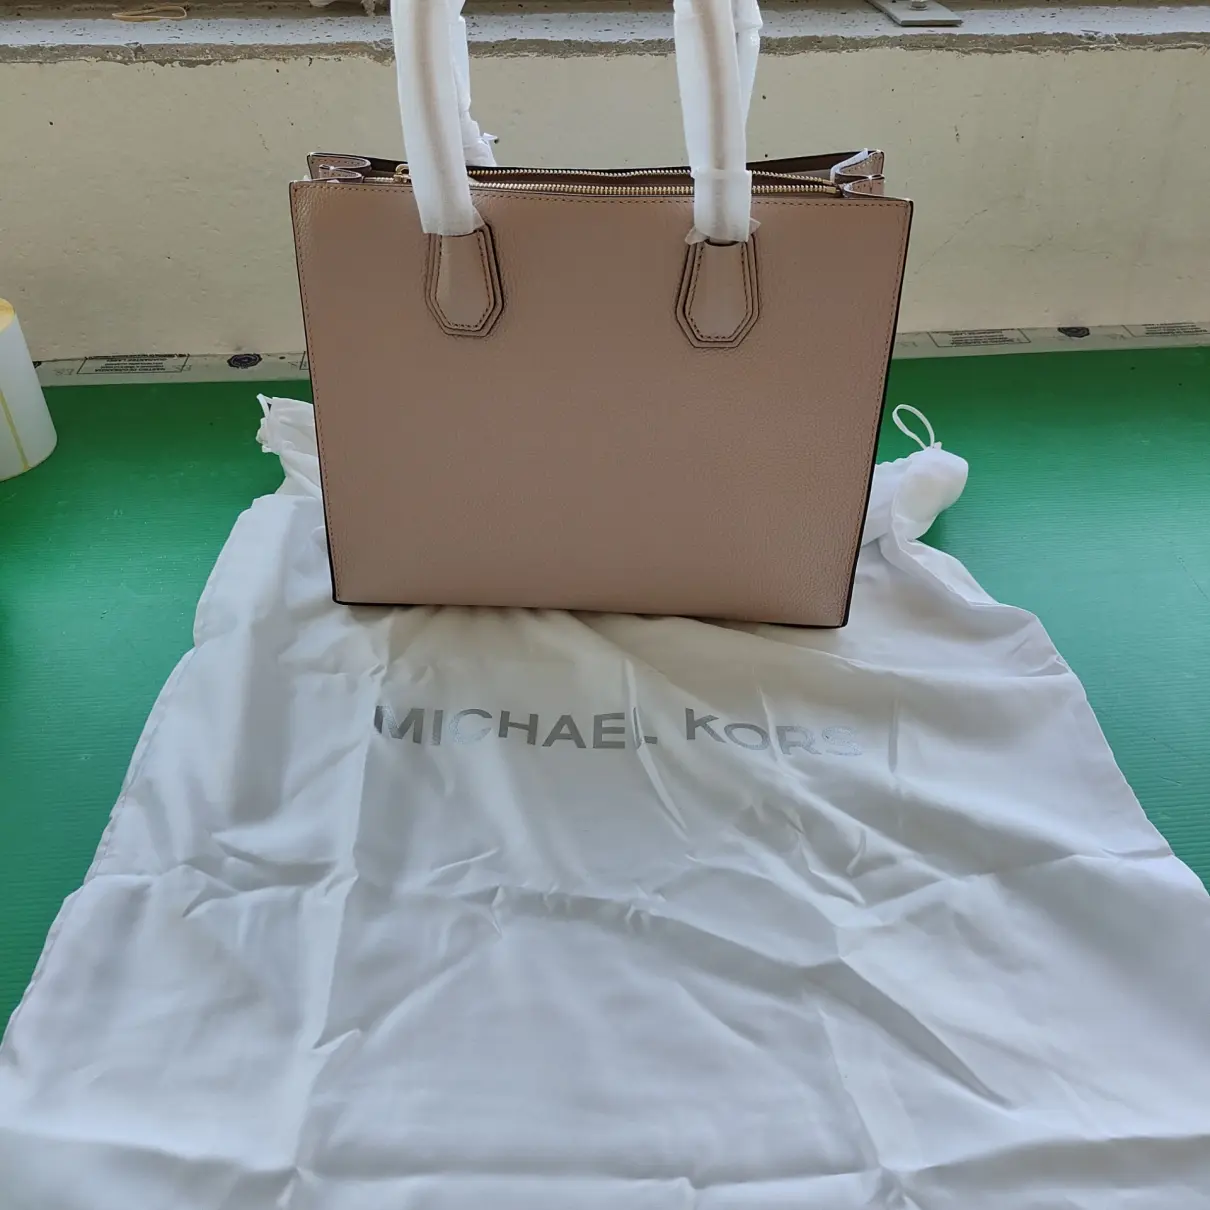 Buy Michael Kors Mercer leather tote online